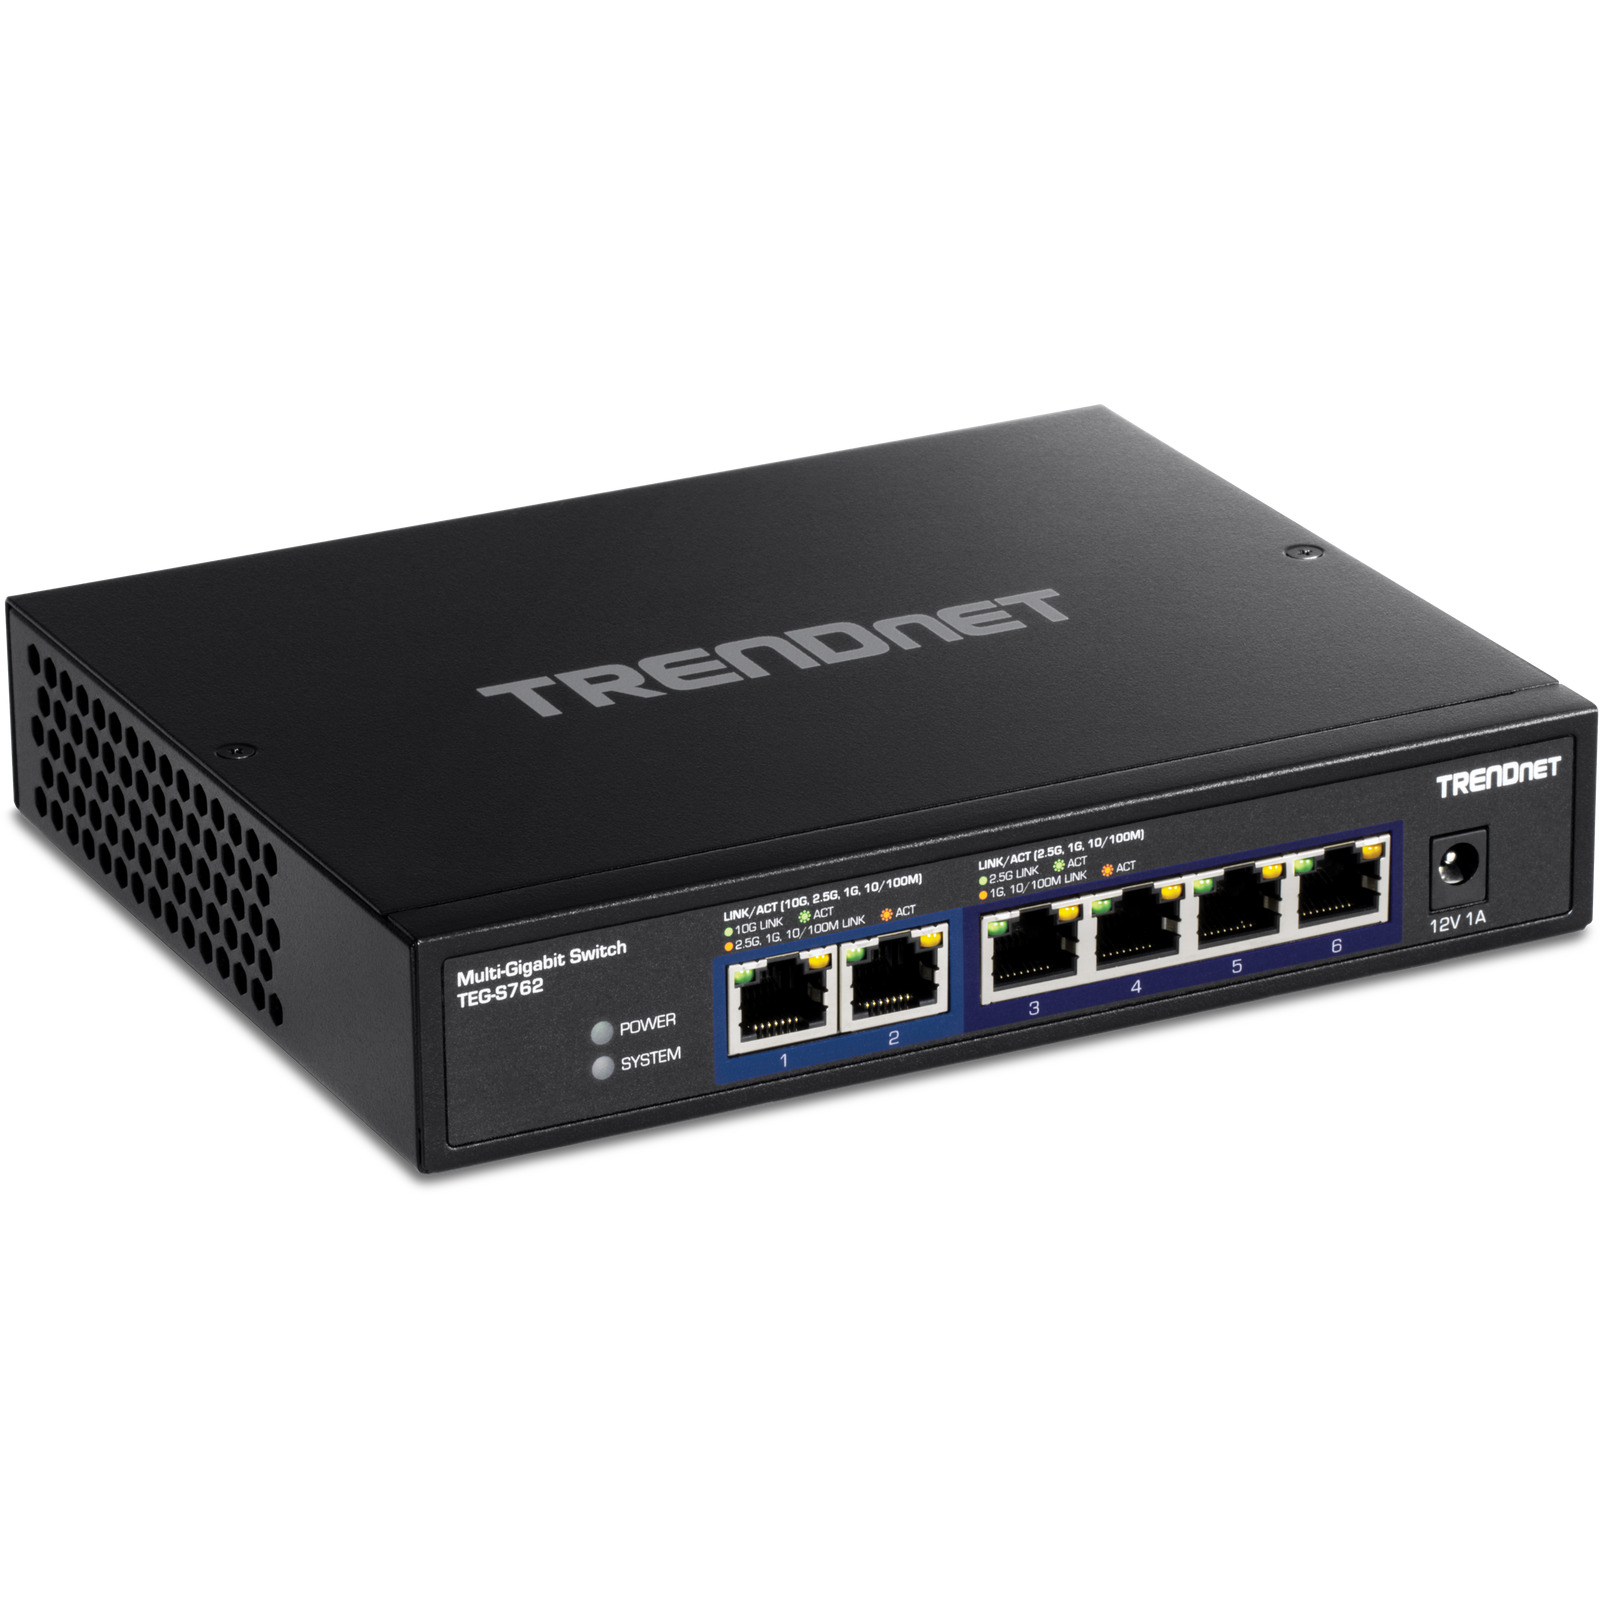 TRENDnet TEG-S762, 6-Port 10G Switch (RENEWED)